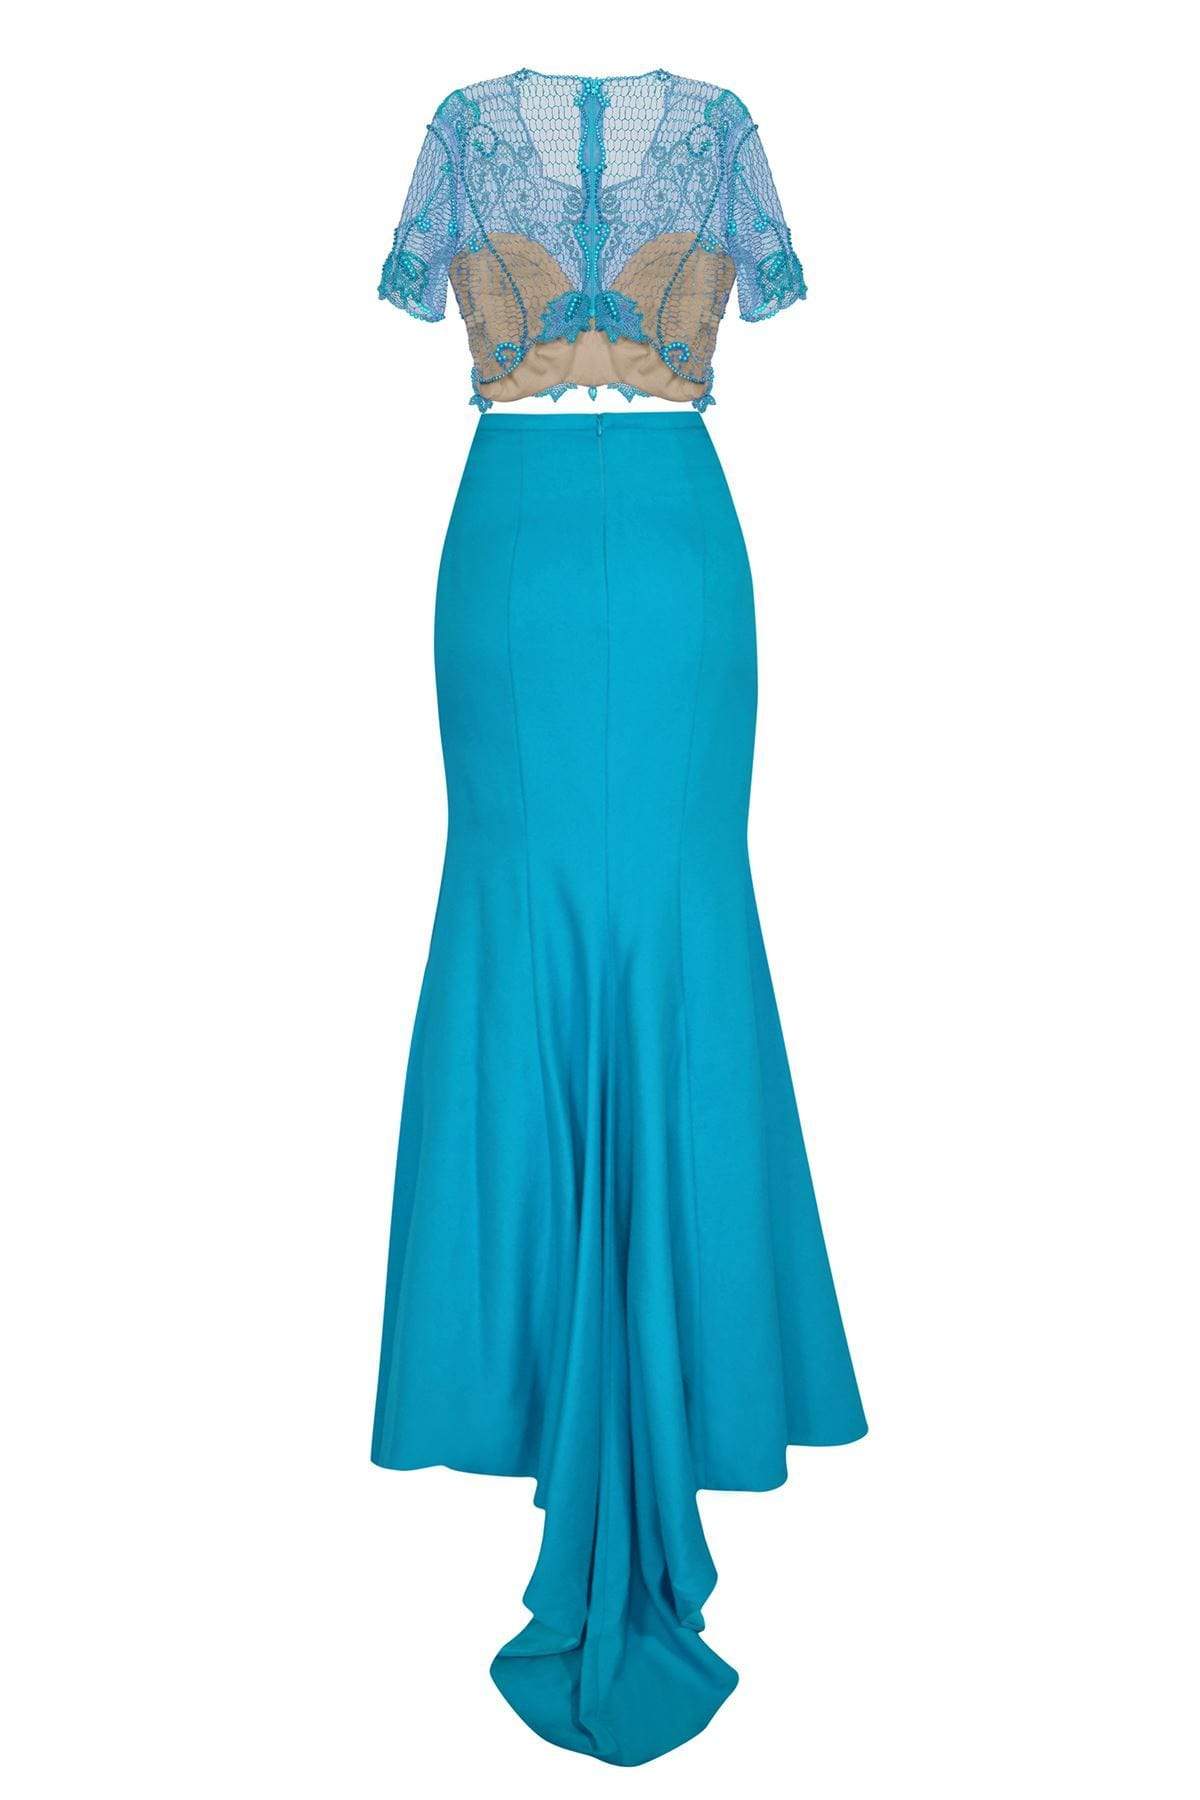 Tarik Ediz - Two Piece Beaded Mermaid Dress 50108 Special Occasion Dress